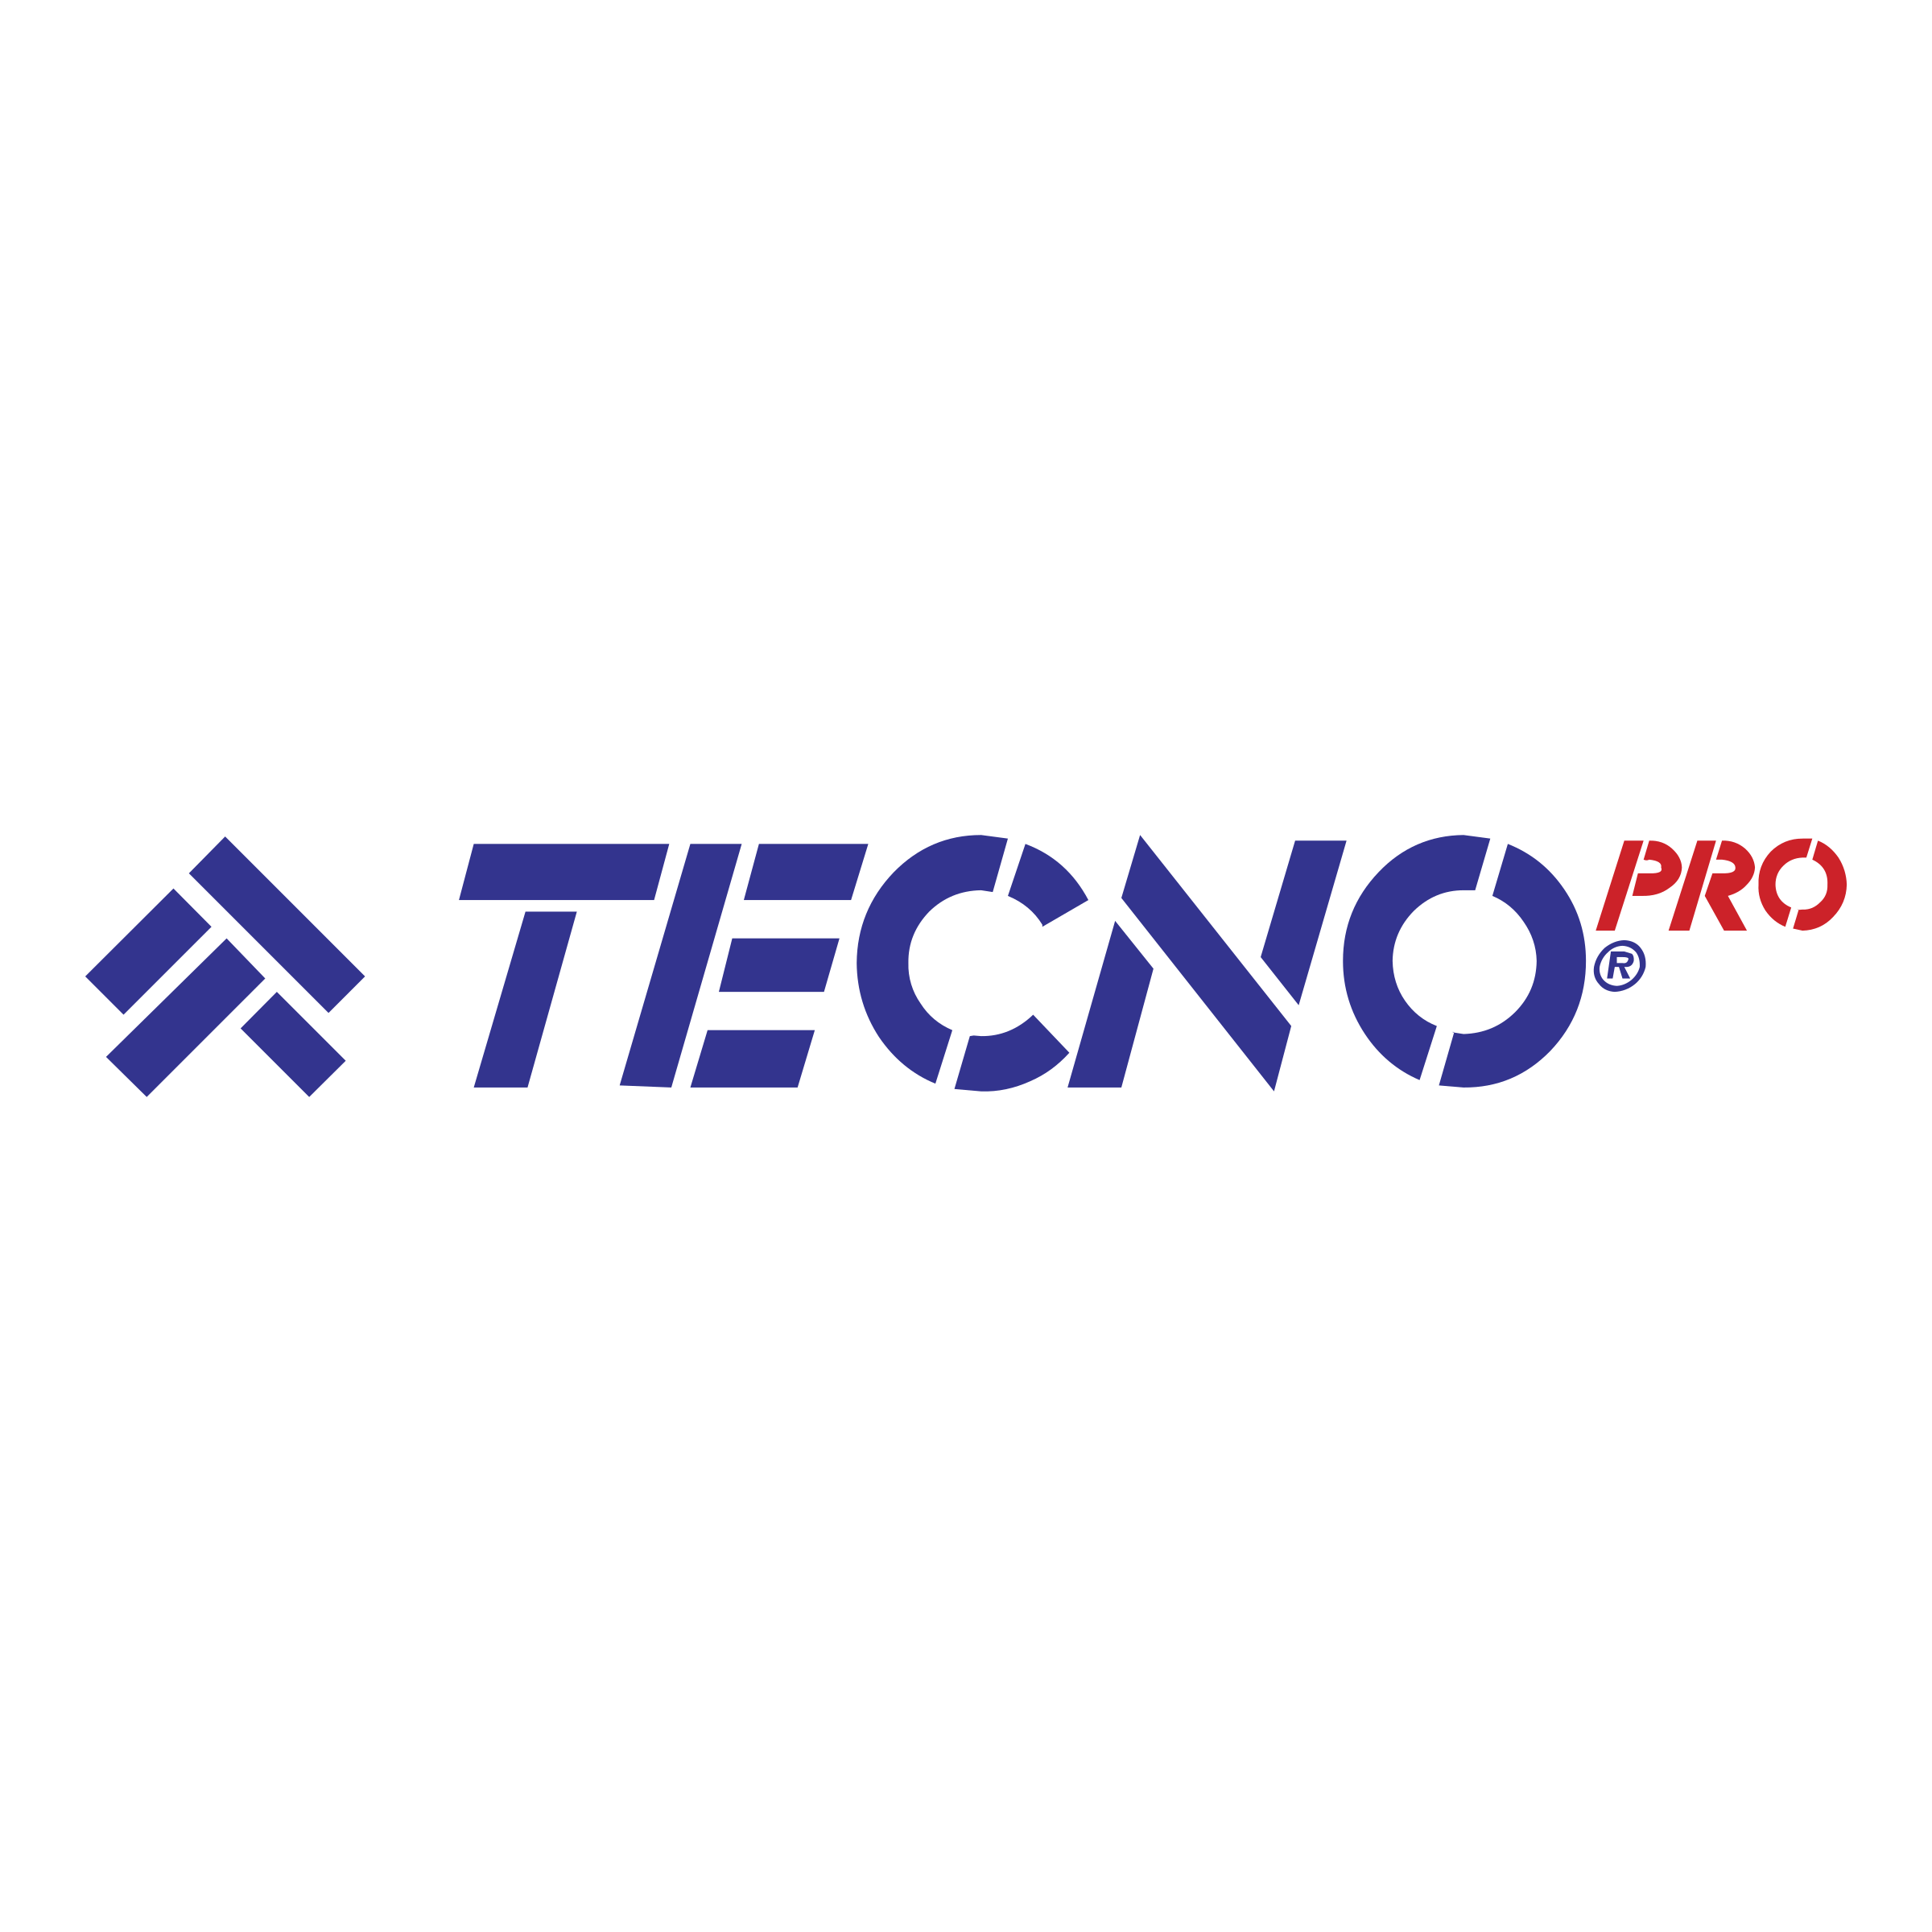 Tenco Logo - Tecno Pro Logo PNG Transparent & SVG Vector